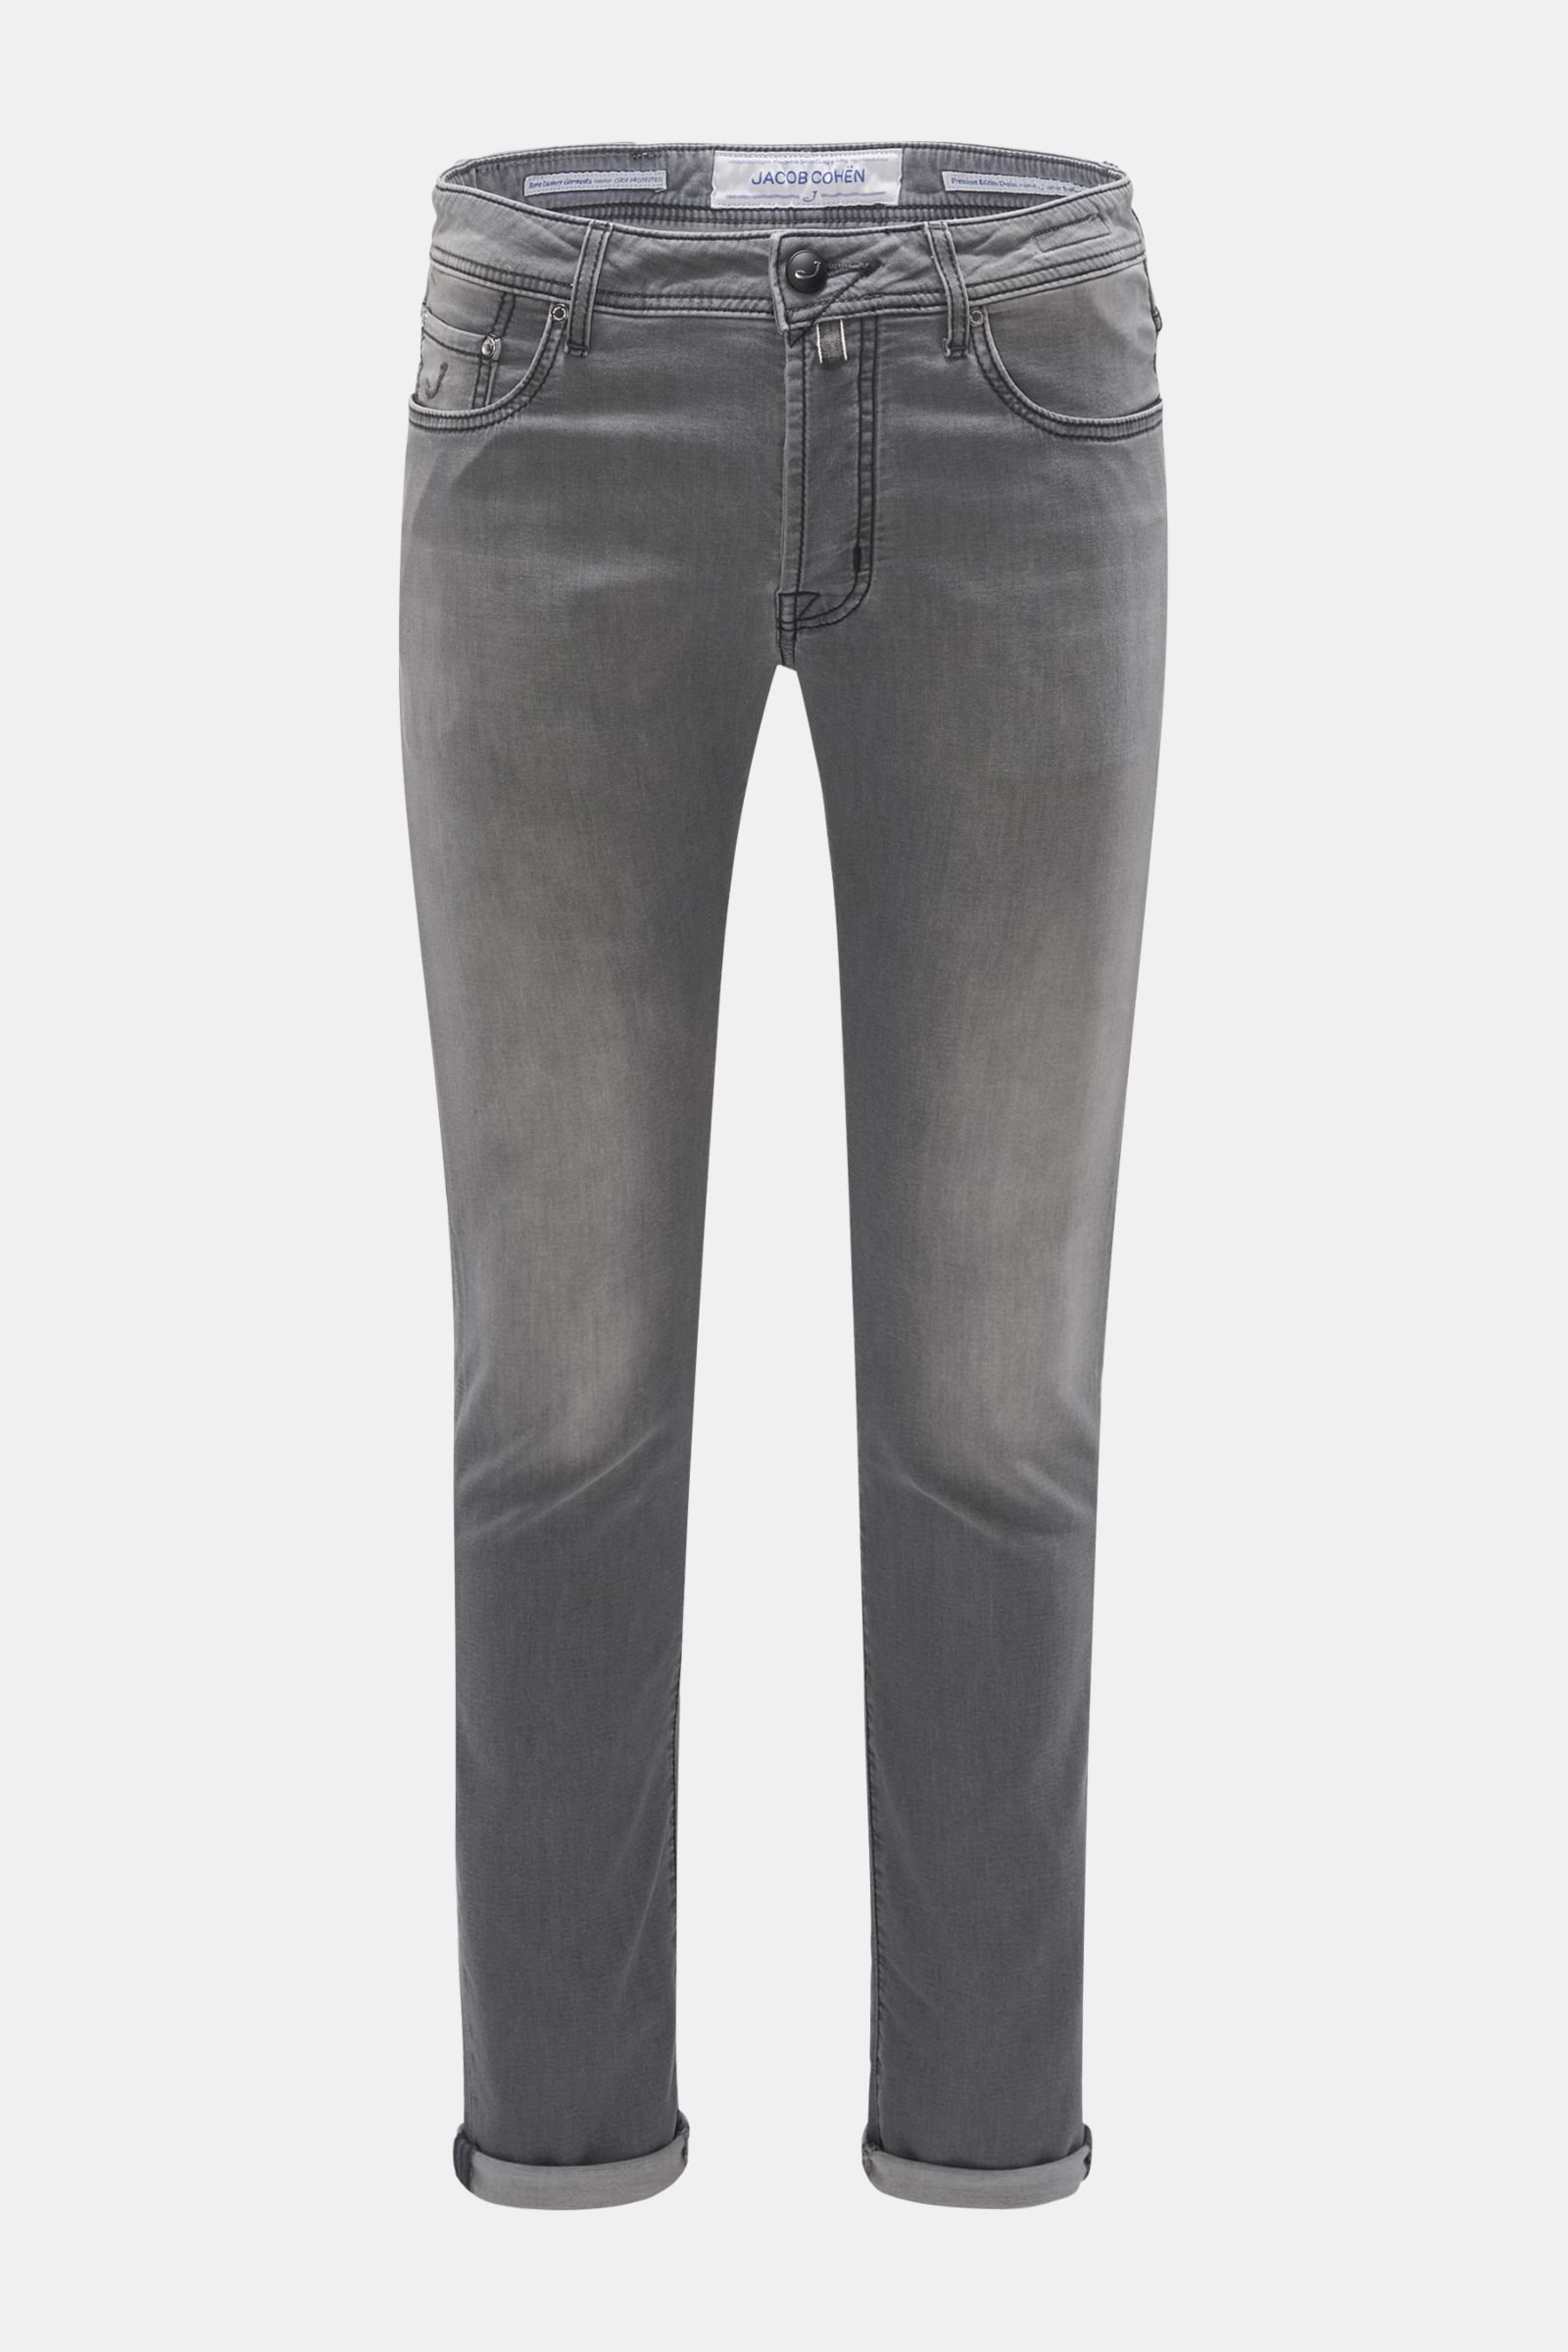 Jeans 'J688 Comfort Slim Fit' grey